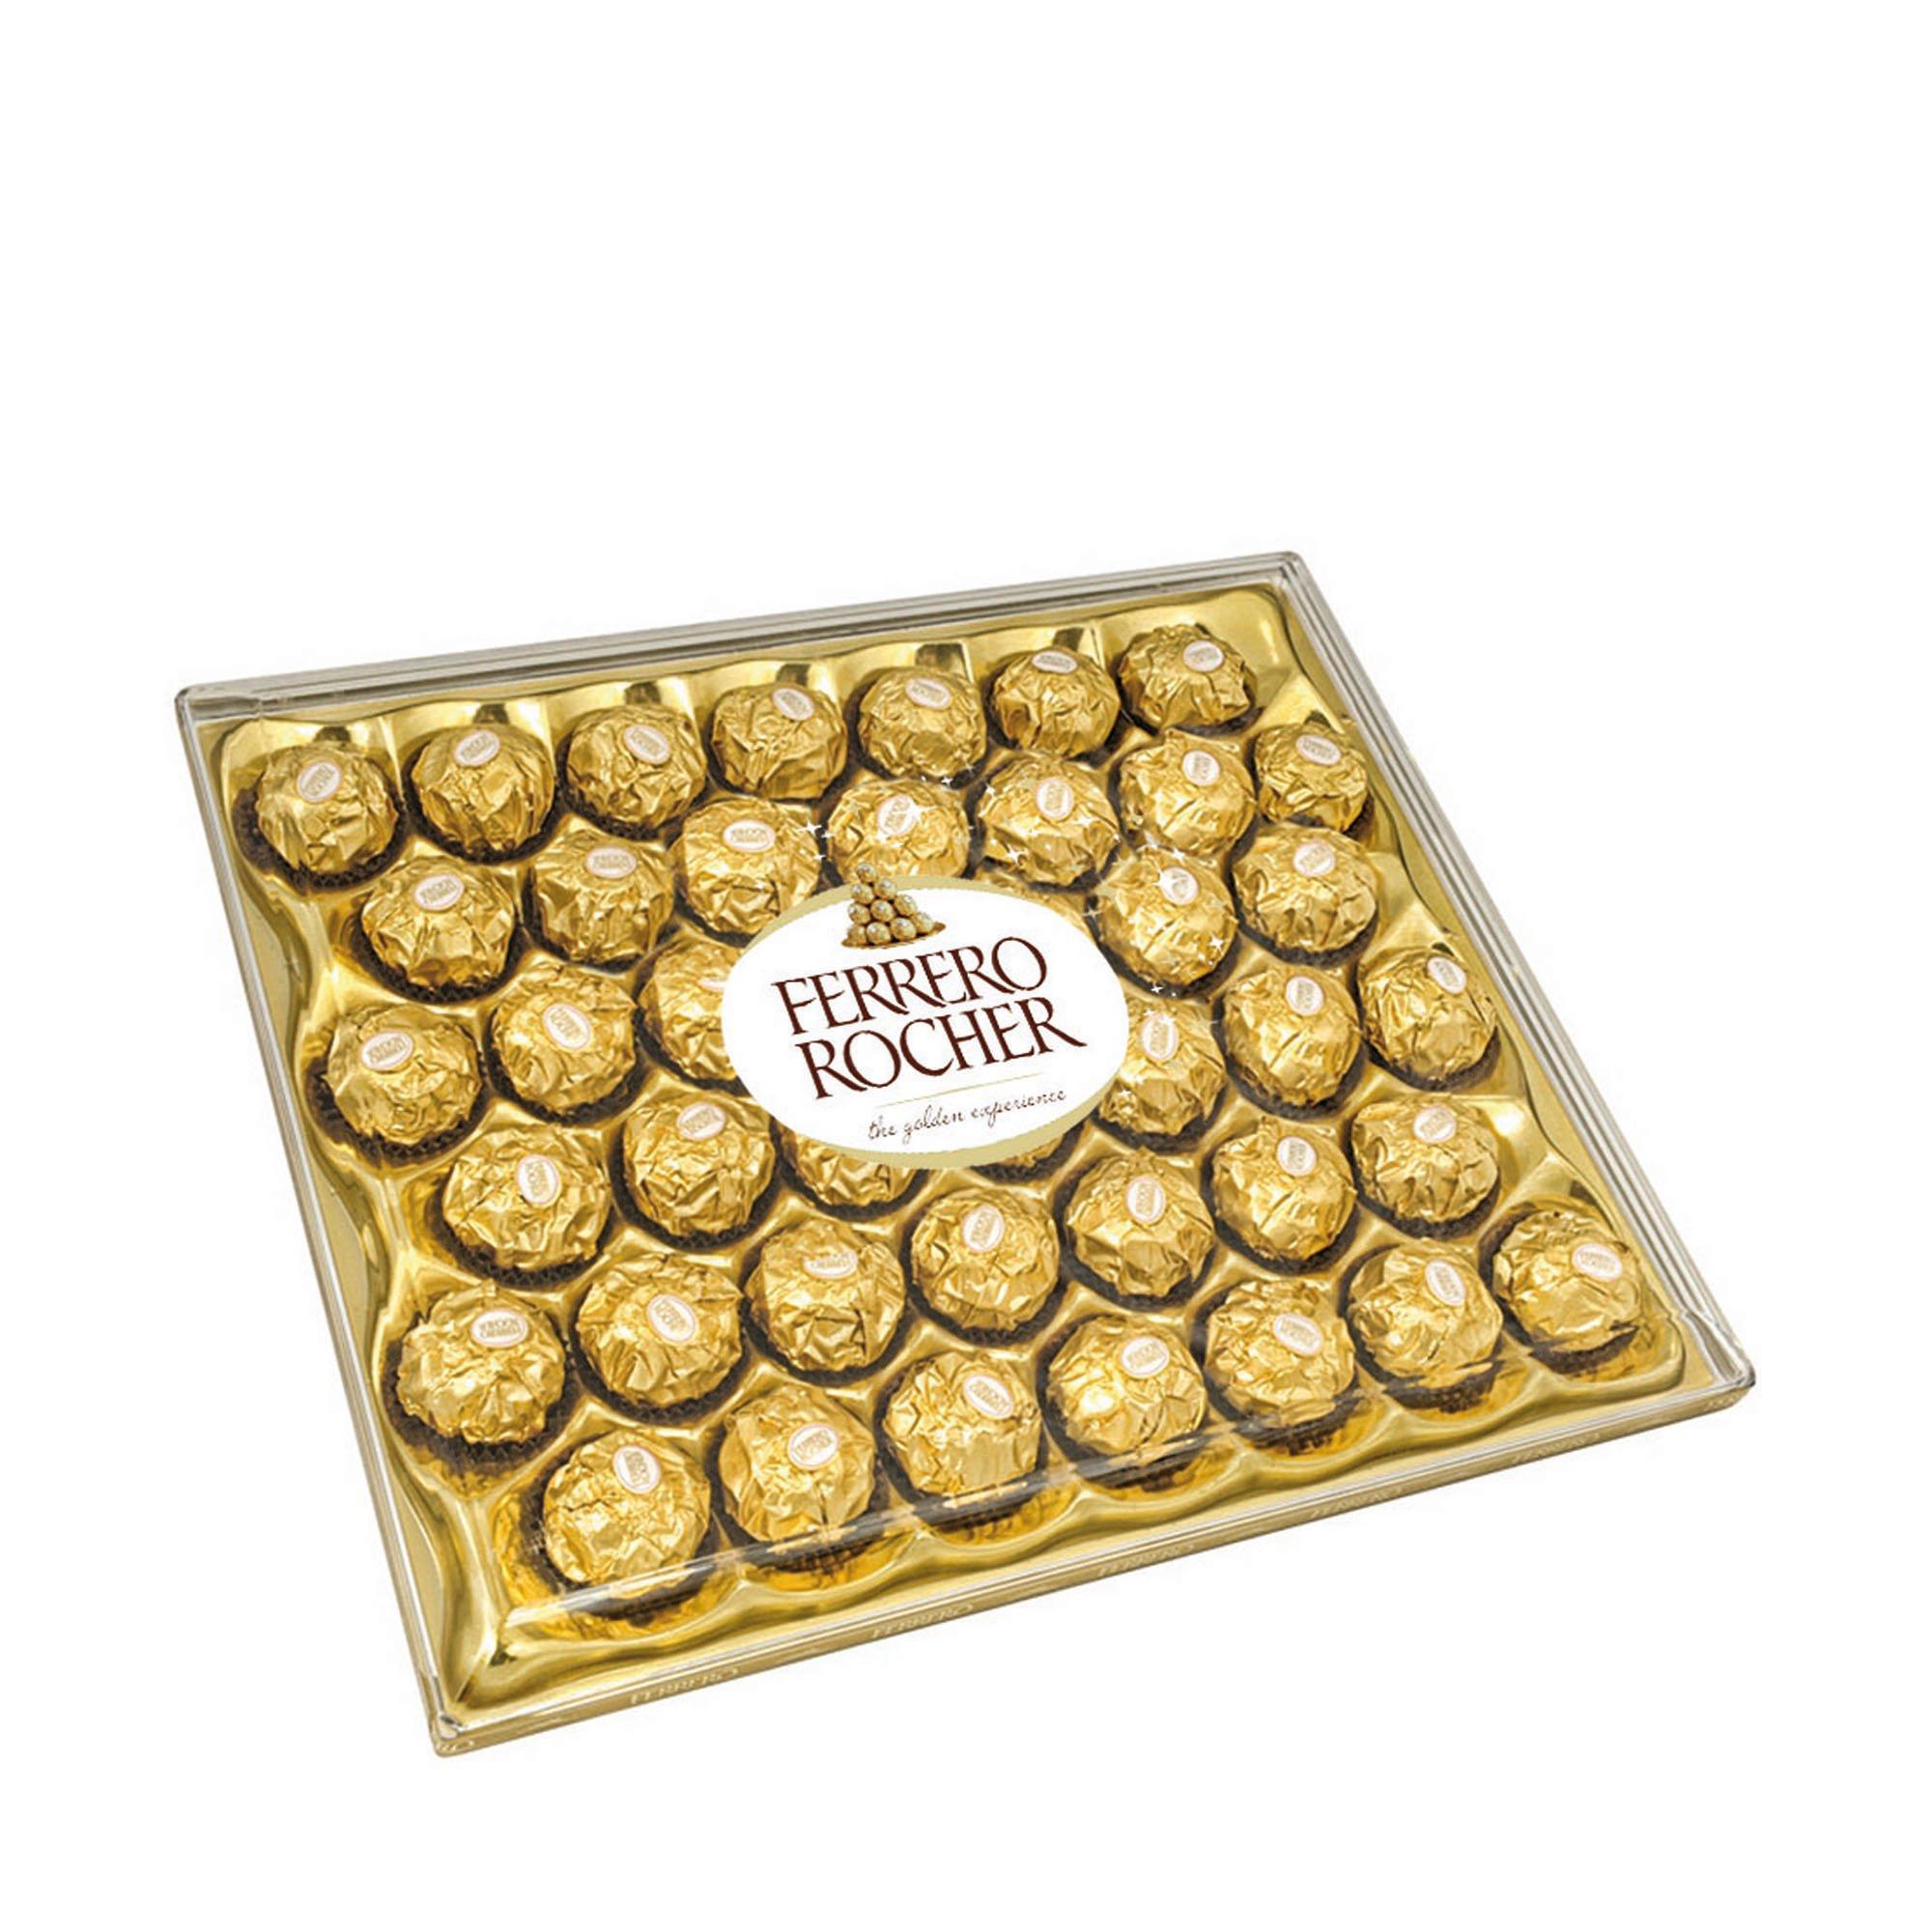 Ferrero Rocher Boîte de Rochers au Chocolat, 525g 